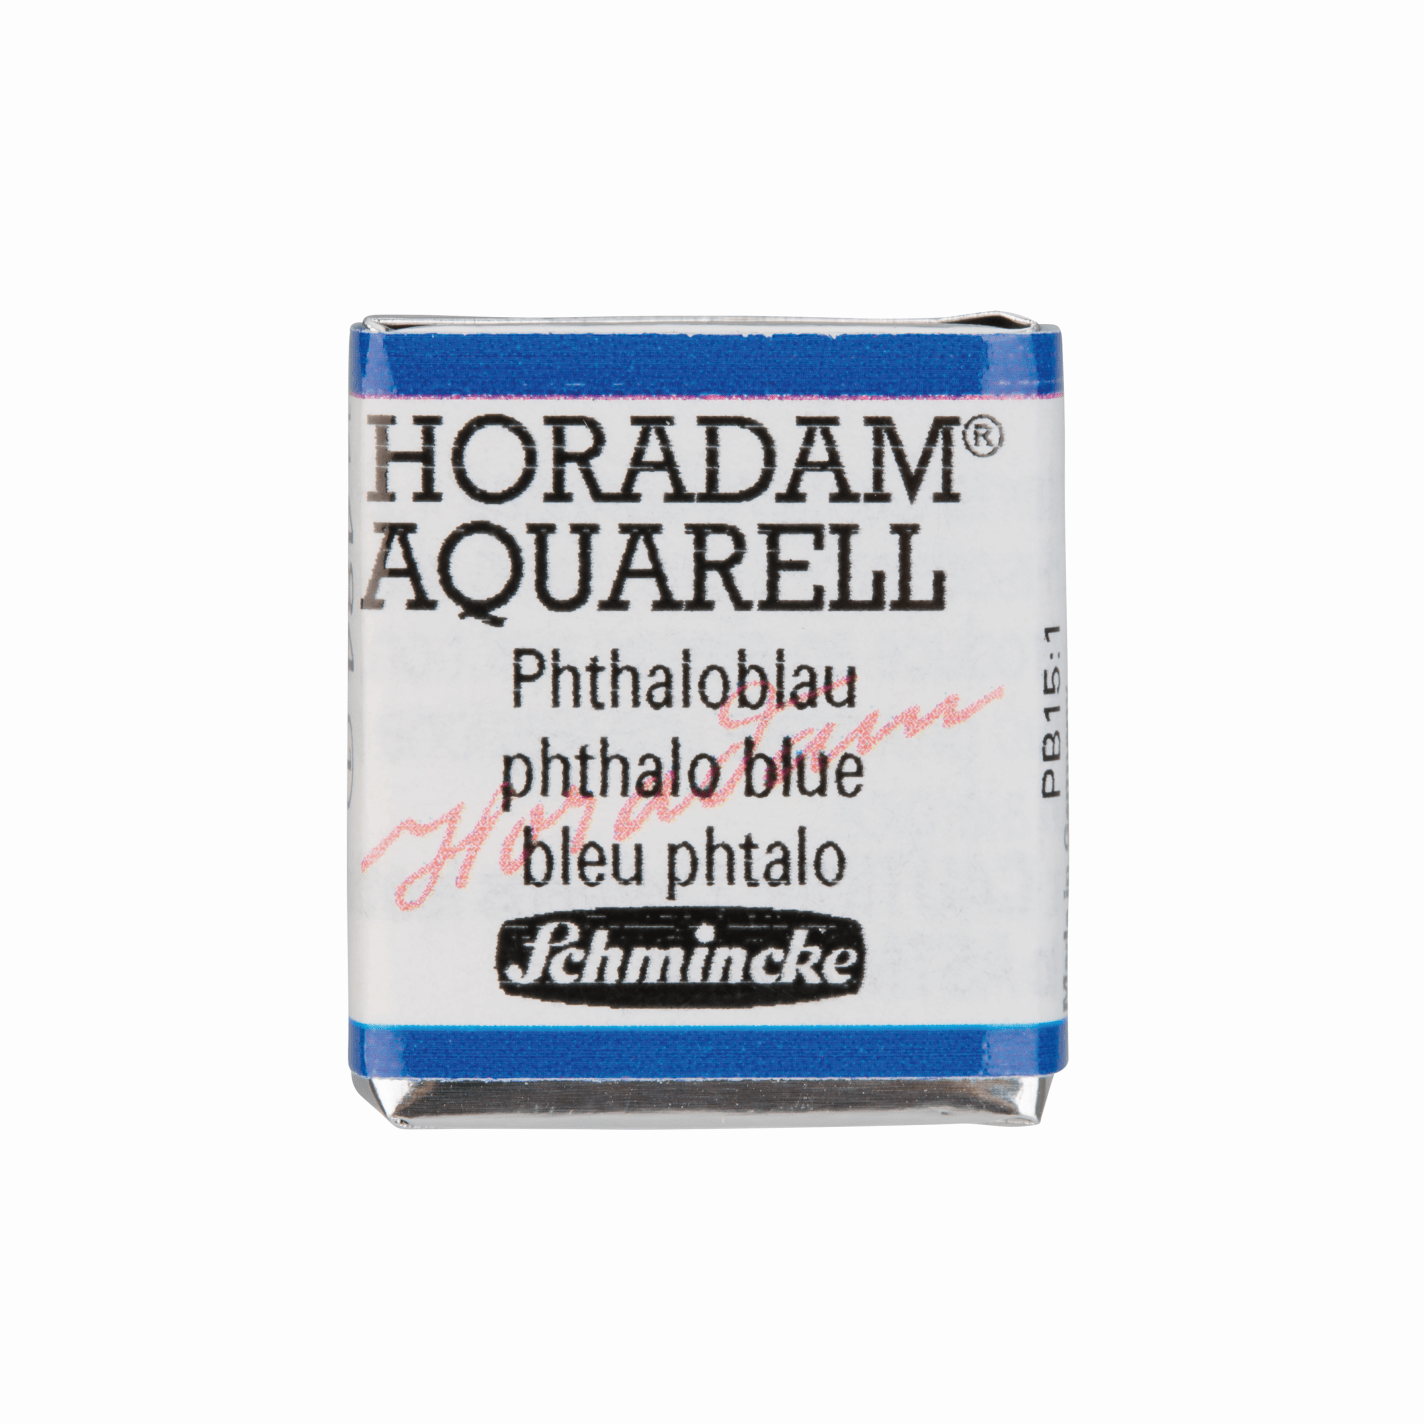 Schmincke Horadam Aquarell pans 1/2 pan Phthalo Blue